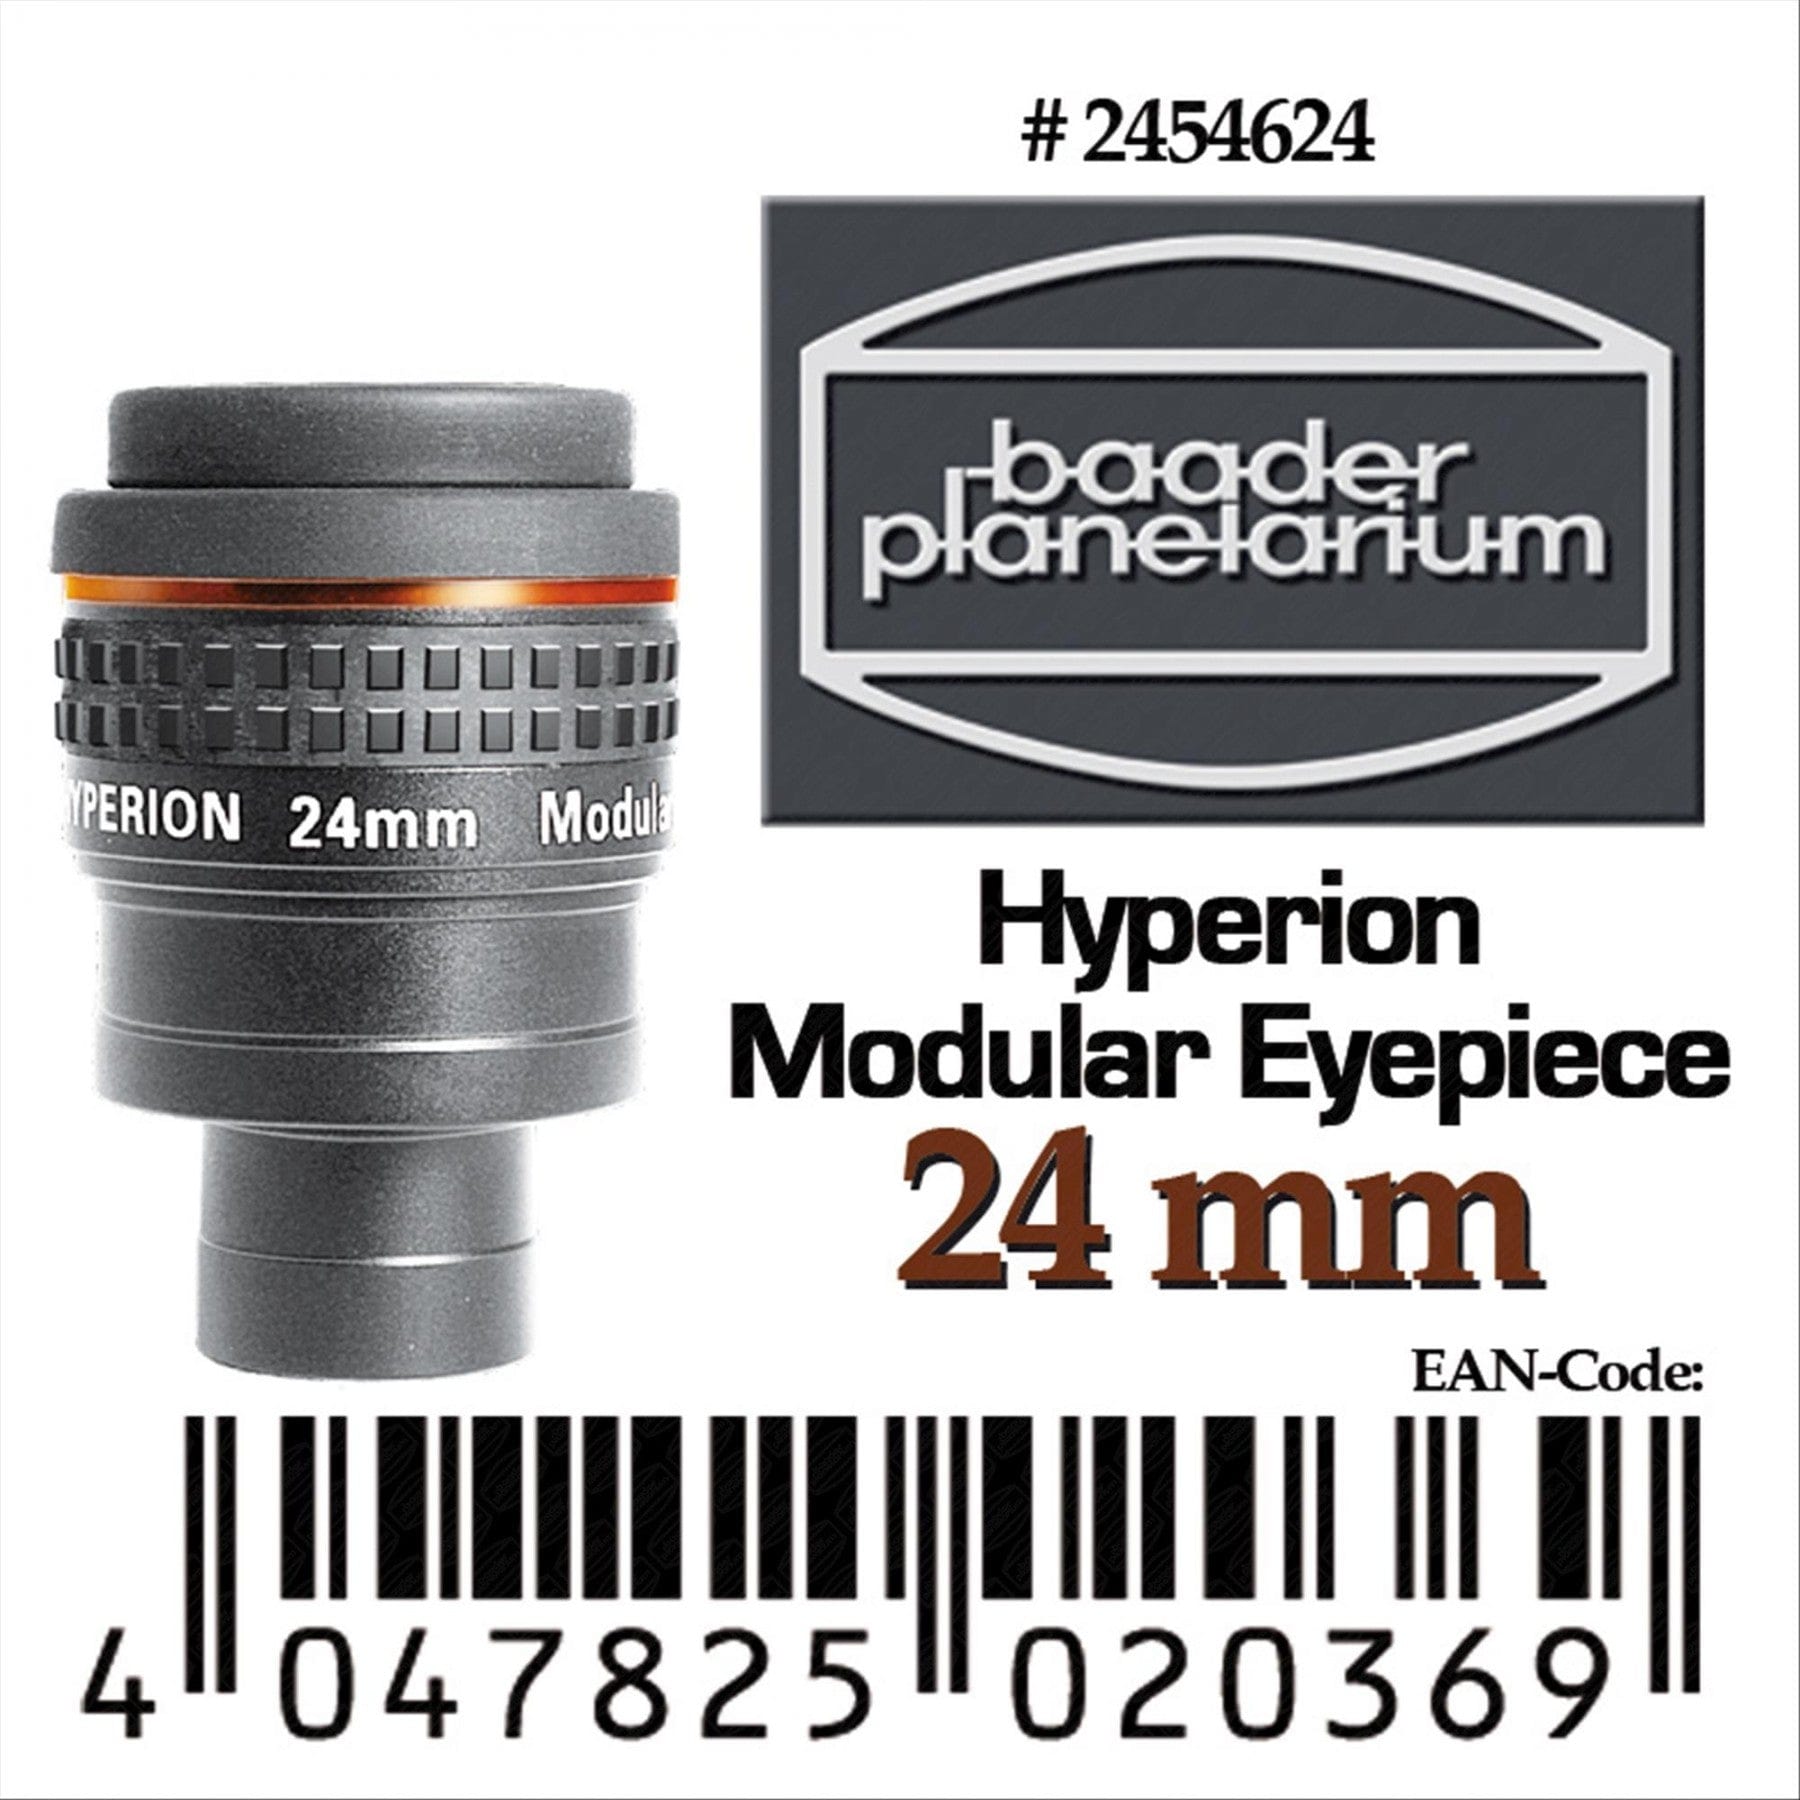 Baader Planetarium Eyepiece Baader Hyperion 24mm 68 Degree Modular Eyepiece - 2454624